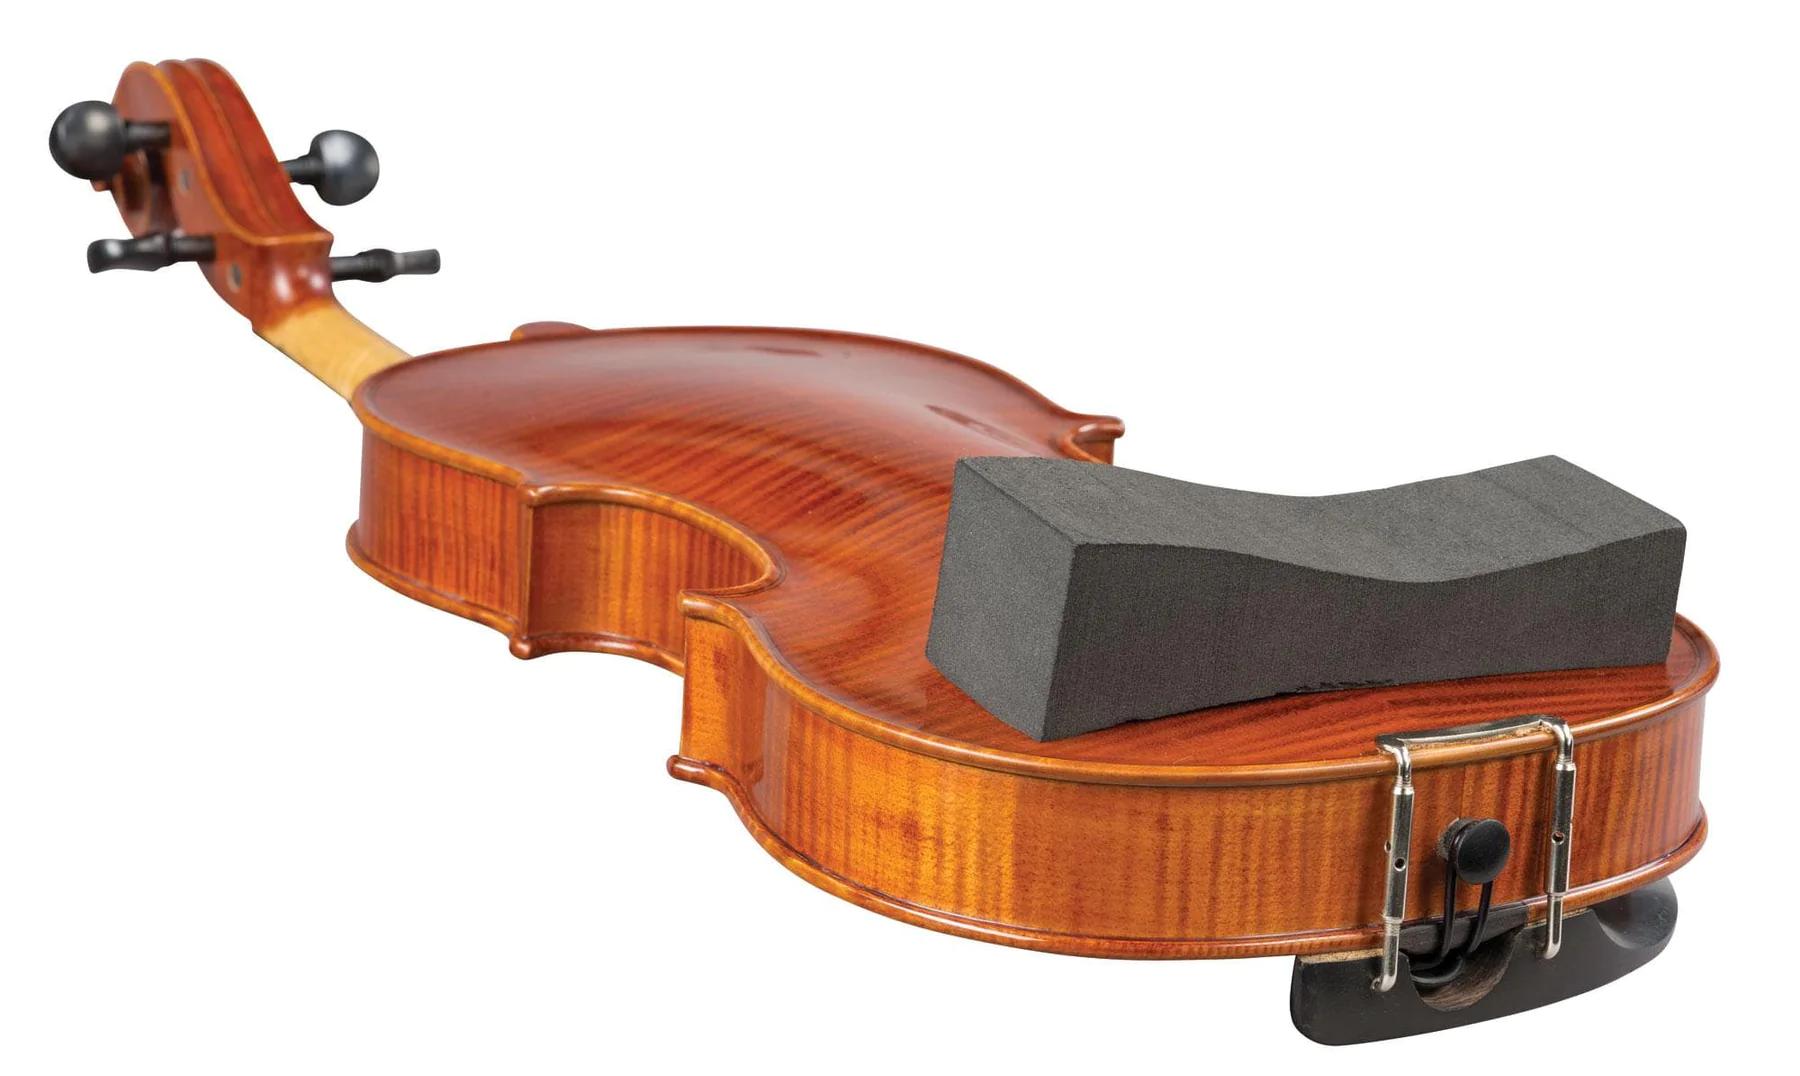 violin cushion - What is a violin sponge